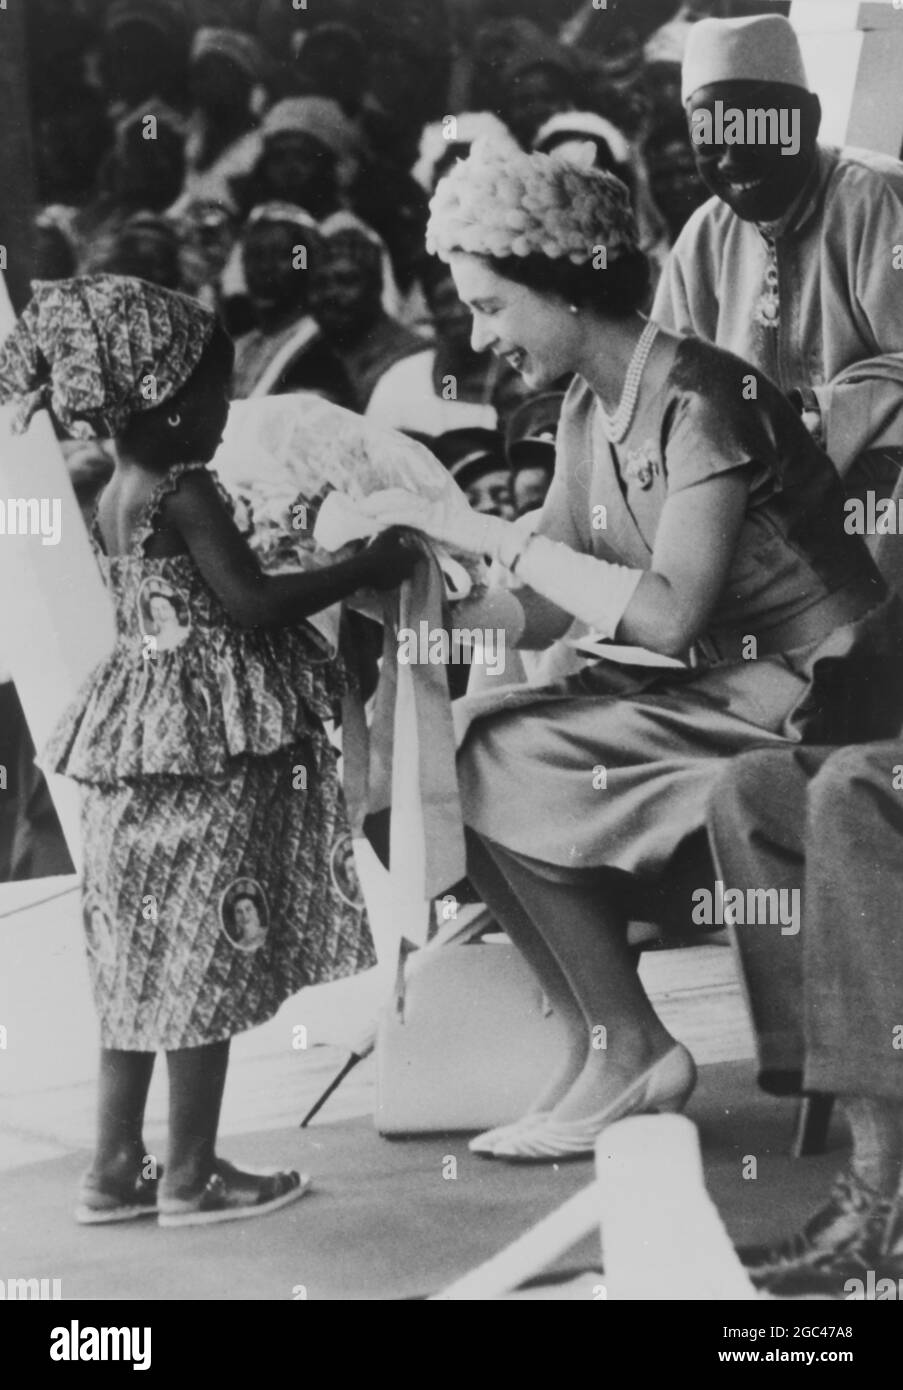 QUEEN ELIZABETH II RECEIVES BOUQUET FROM A CHILD IN SIERRA LEONE 30 NOVEMBER 1961 Stock Photo